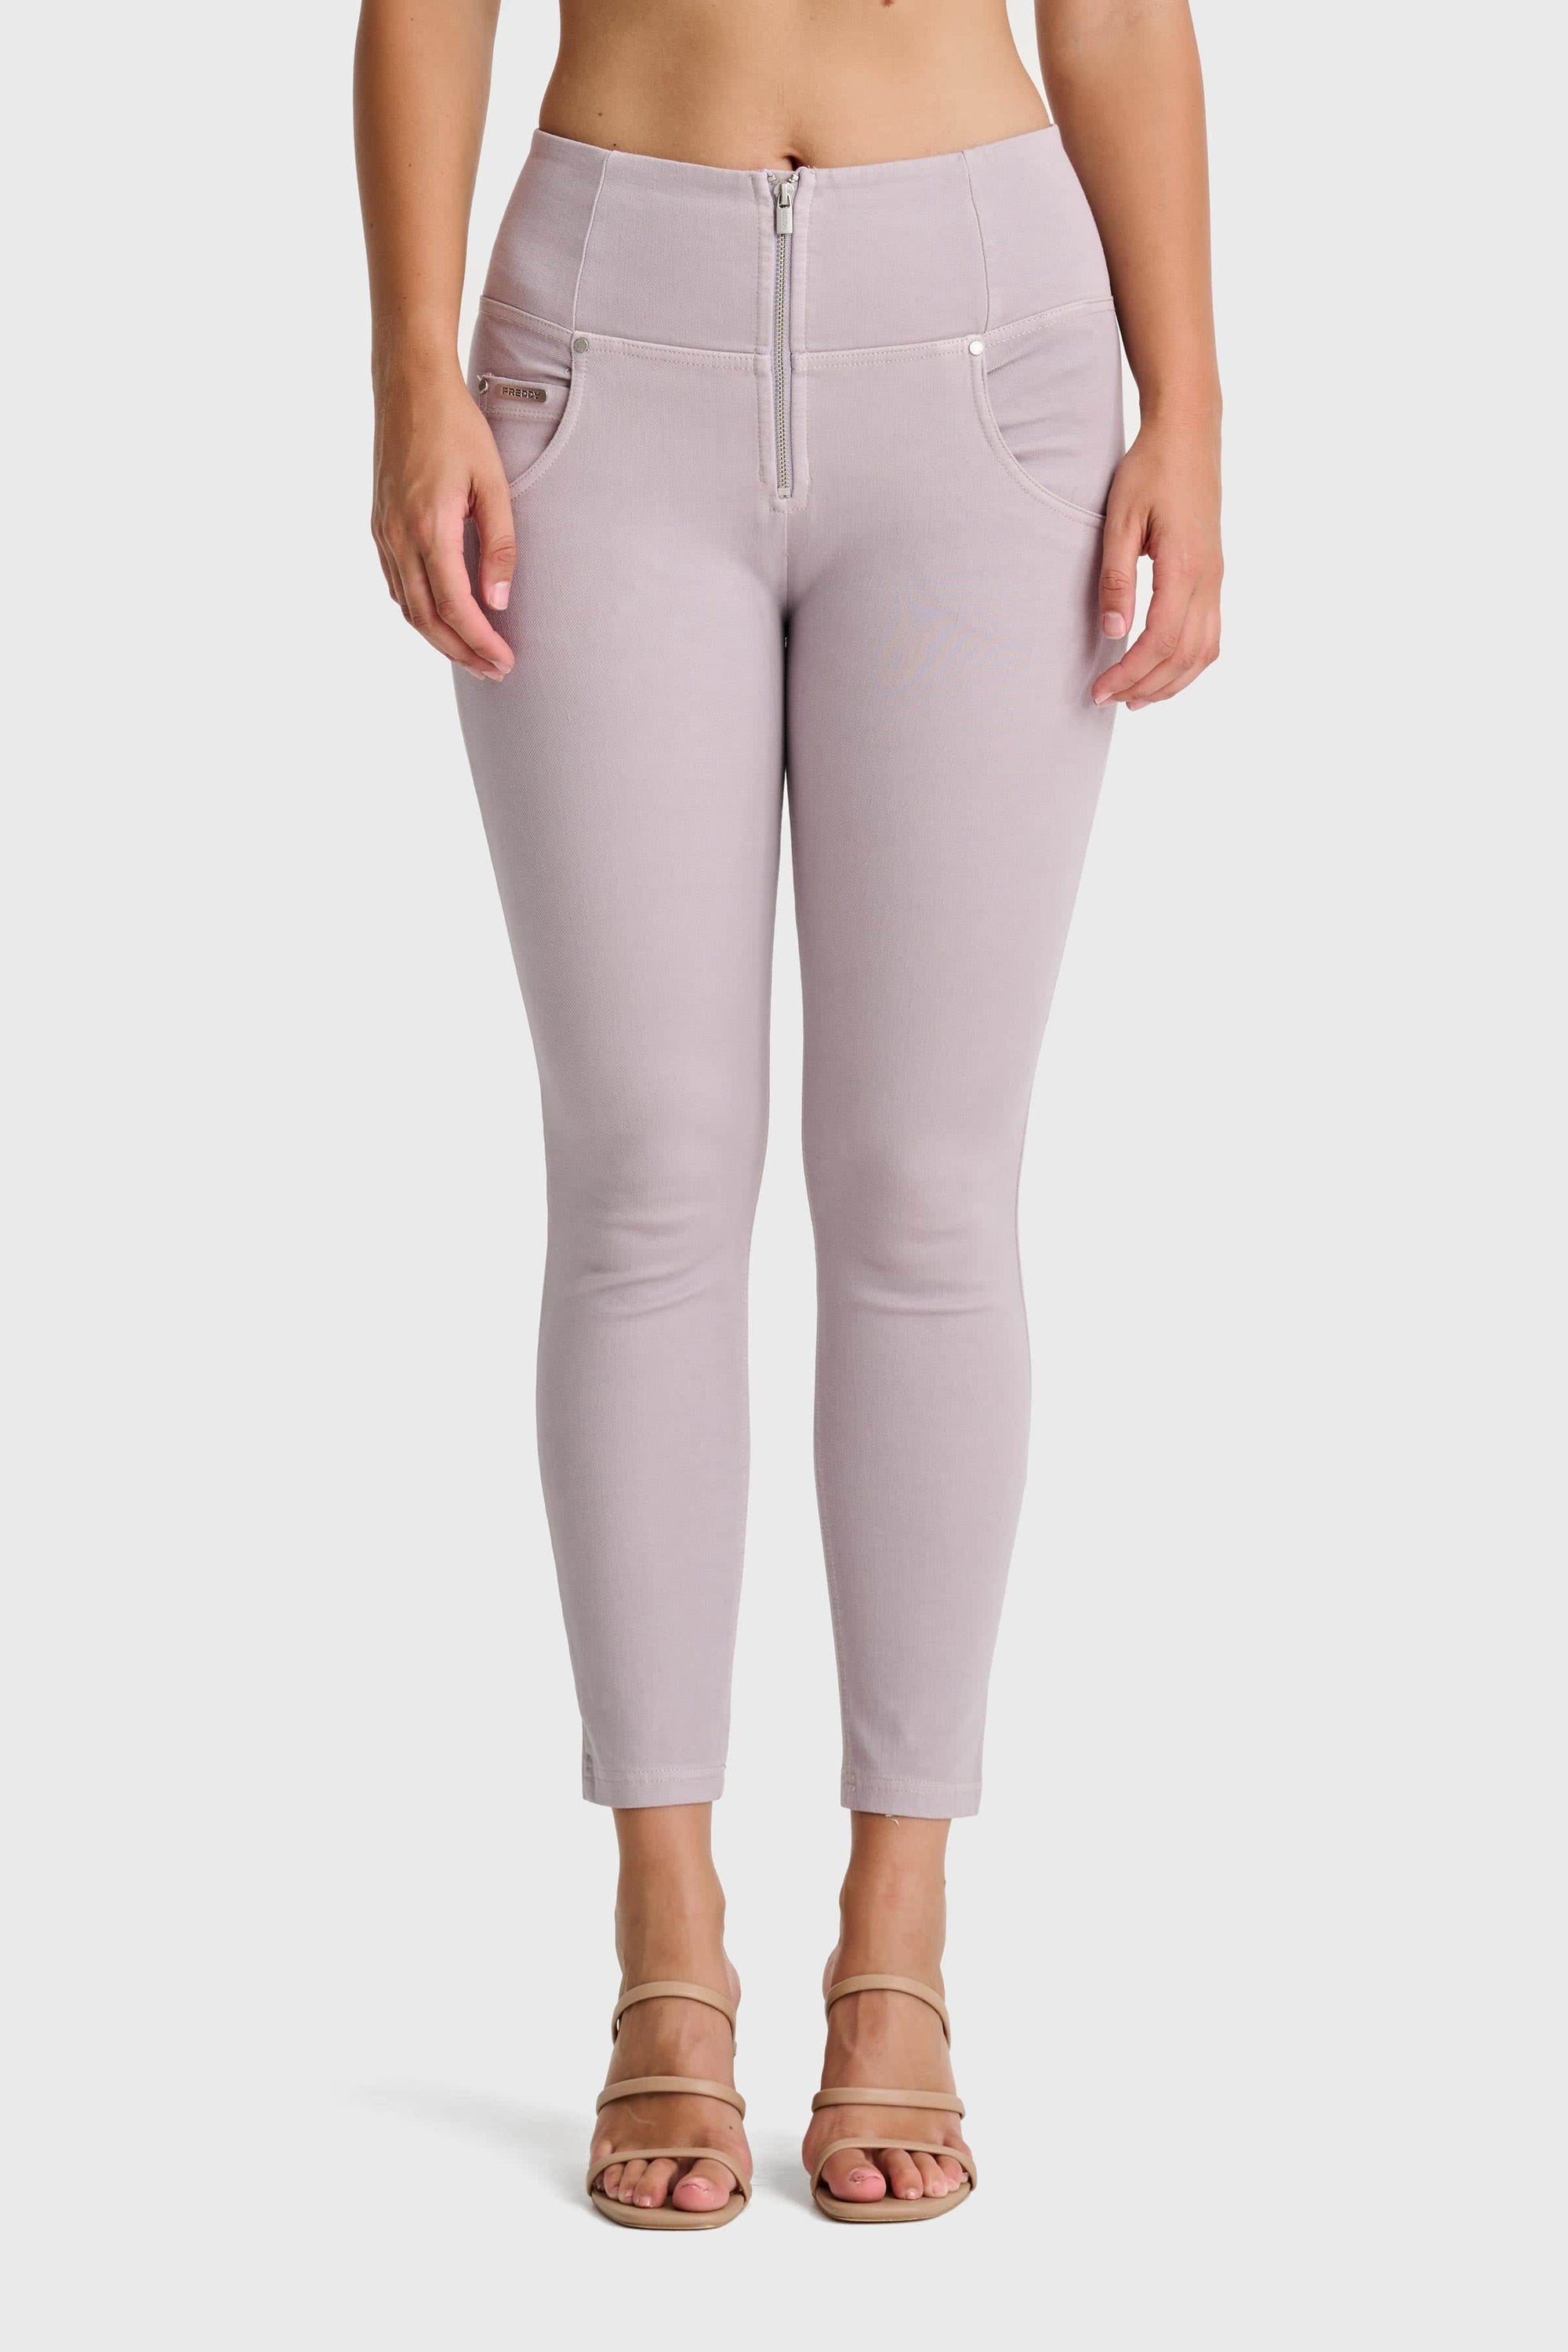 WR.UP® Snug Jeans - High Waisted - 7/8 Length - Light Grey 2